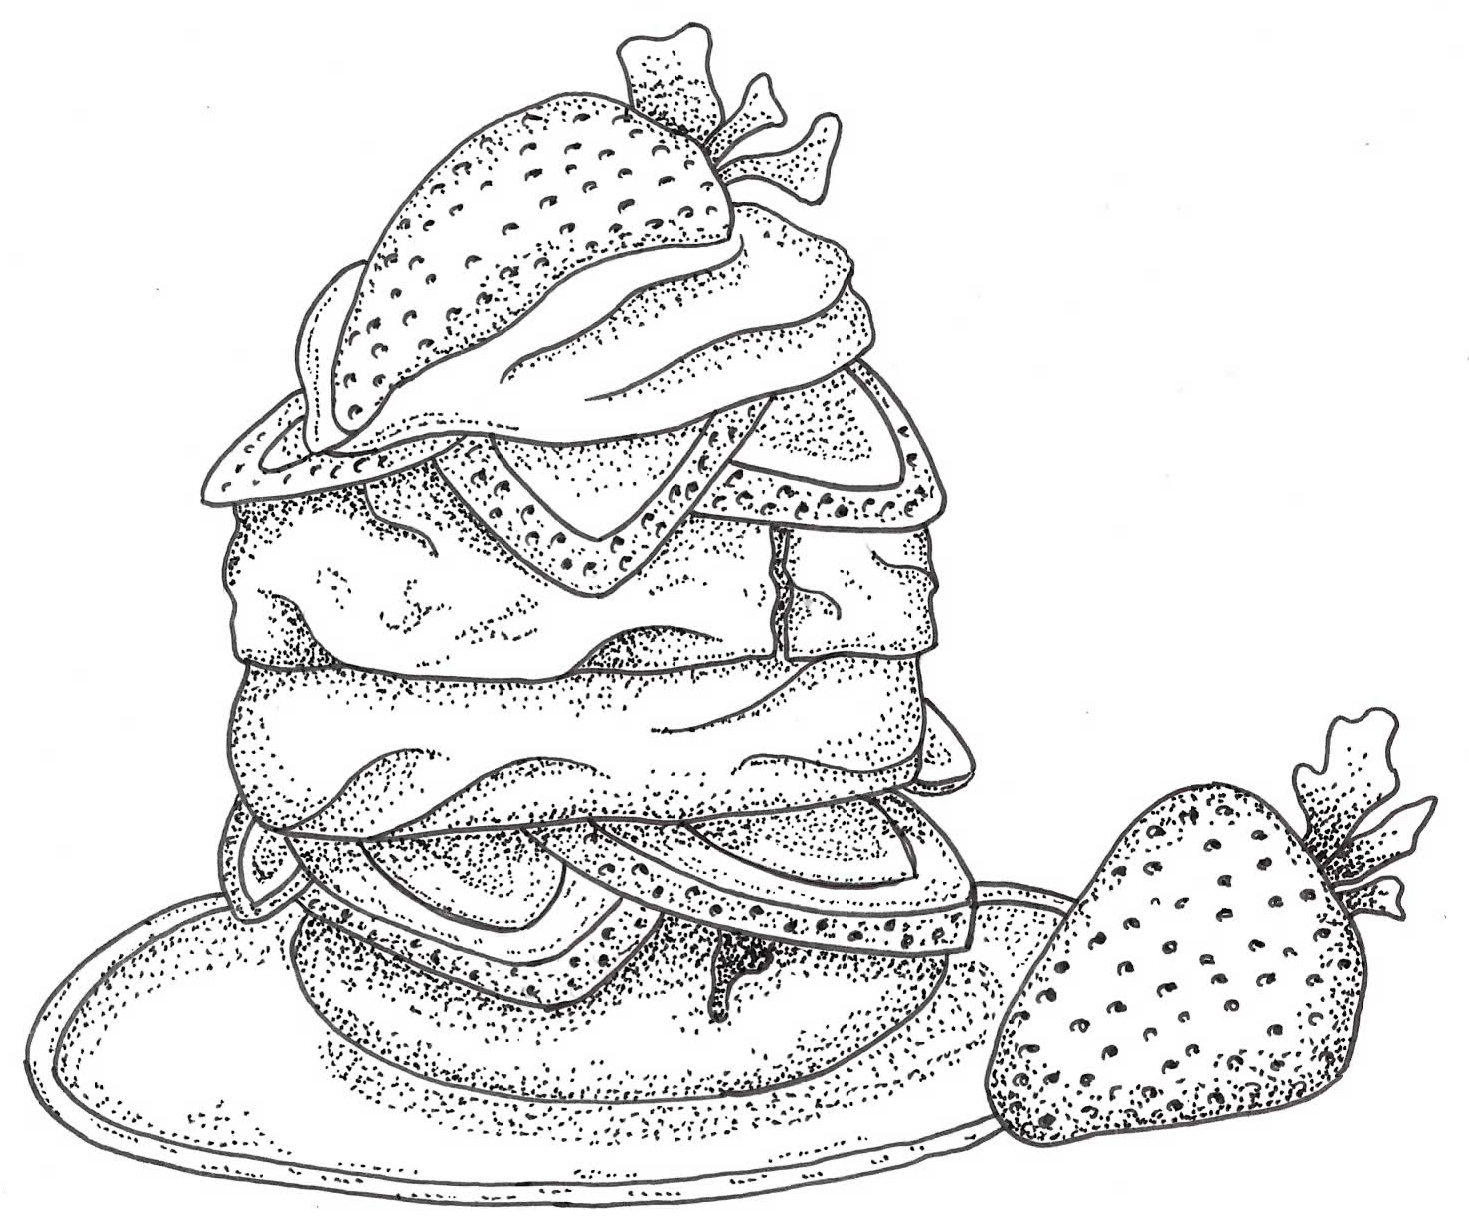 Strawberry Shortcake illustration